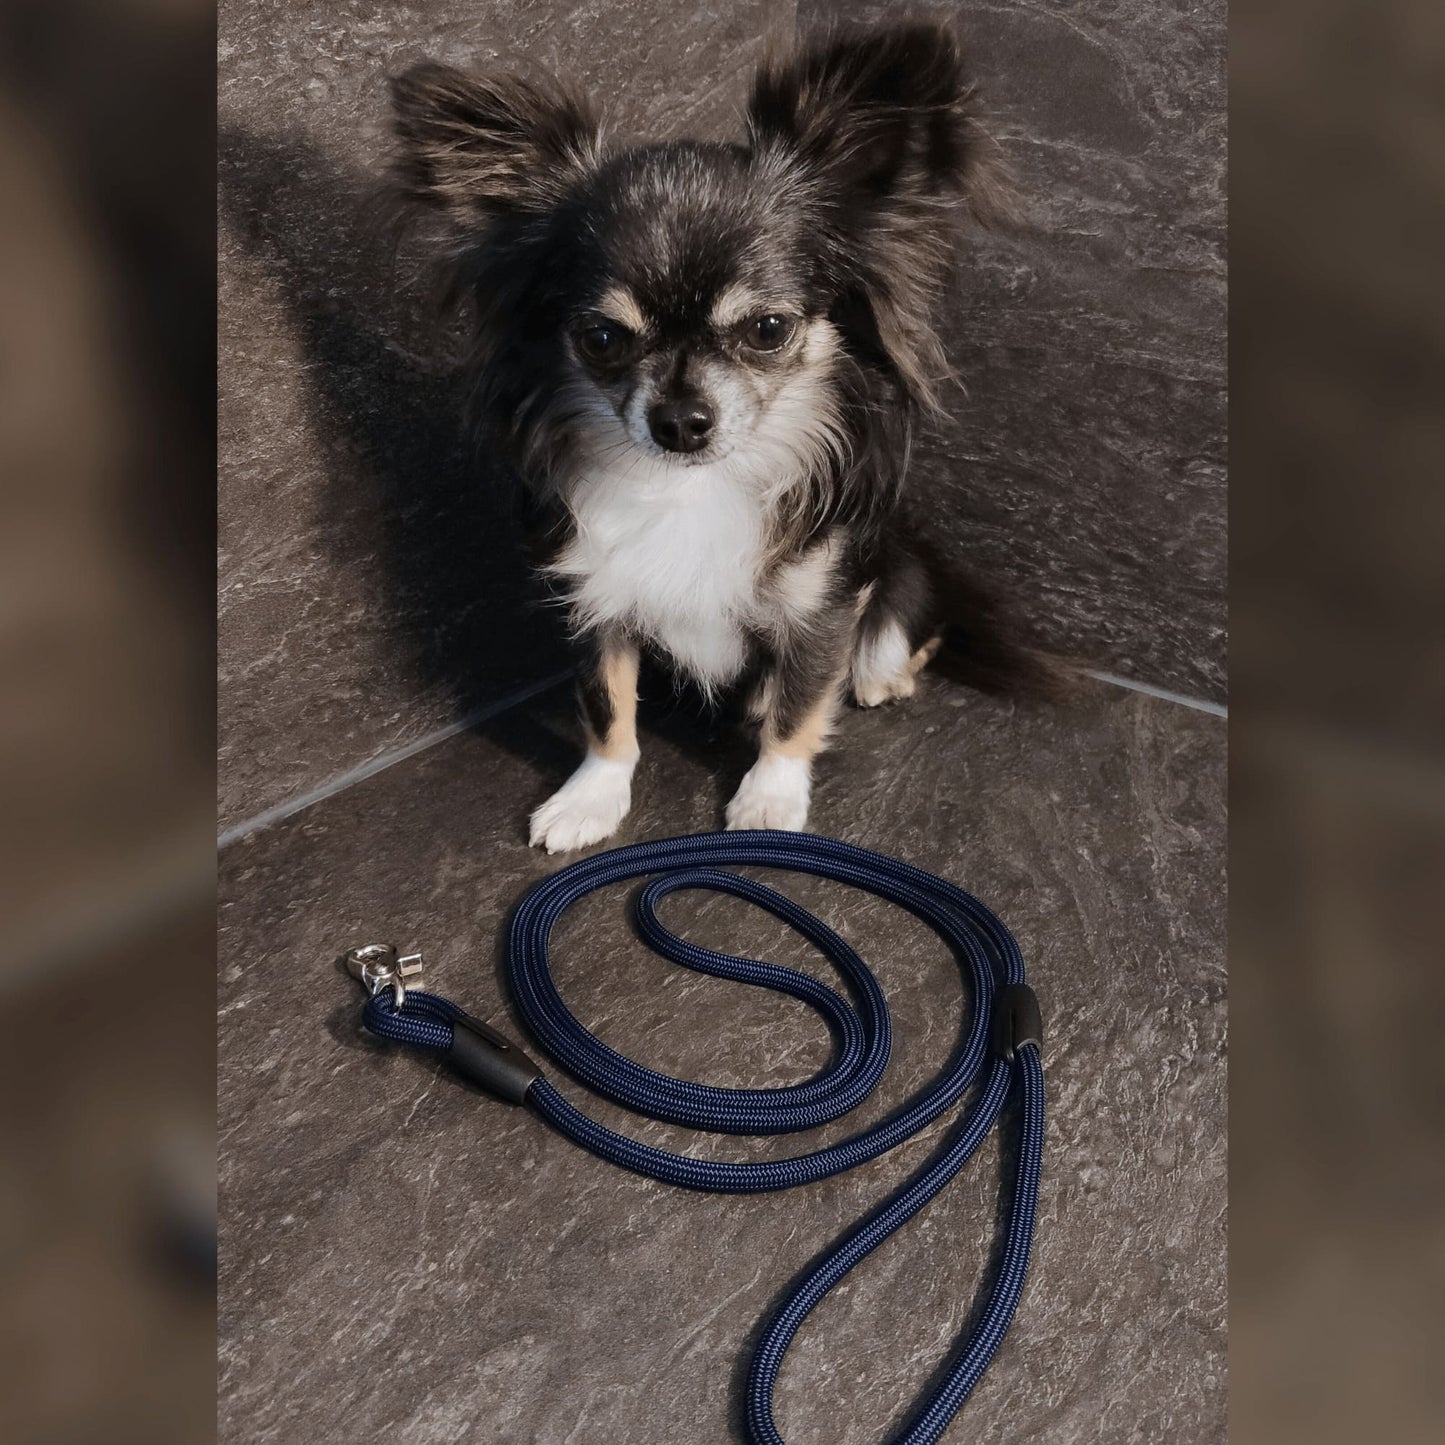 XXS Mini Hundeleine aus 6mm runde Paracord 1,5 Meter Mitternachtsblau - CharmingChihuahua